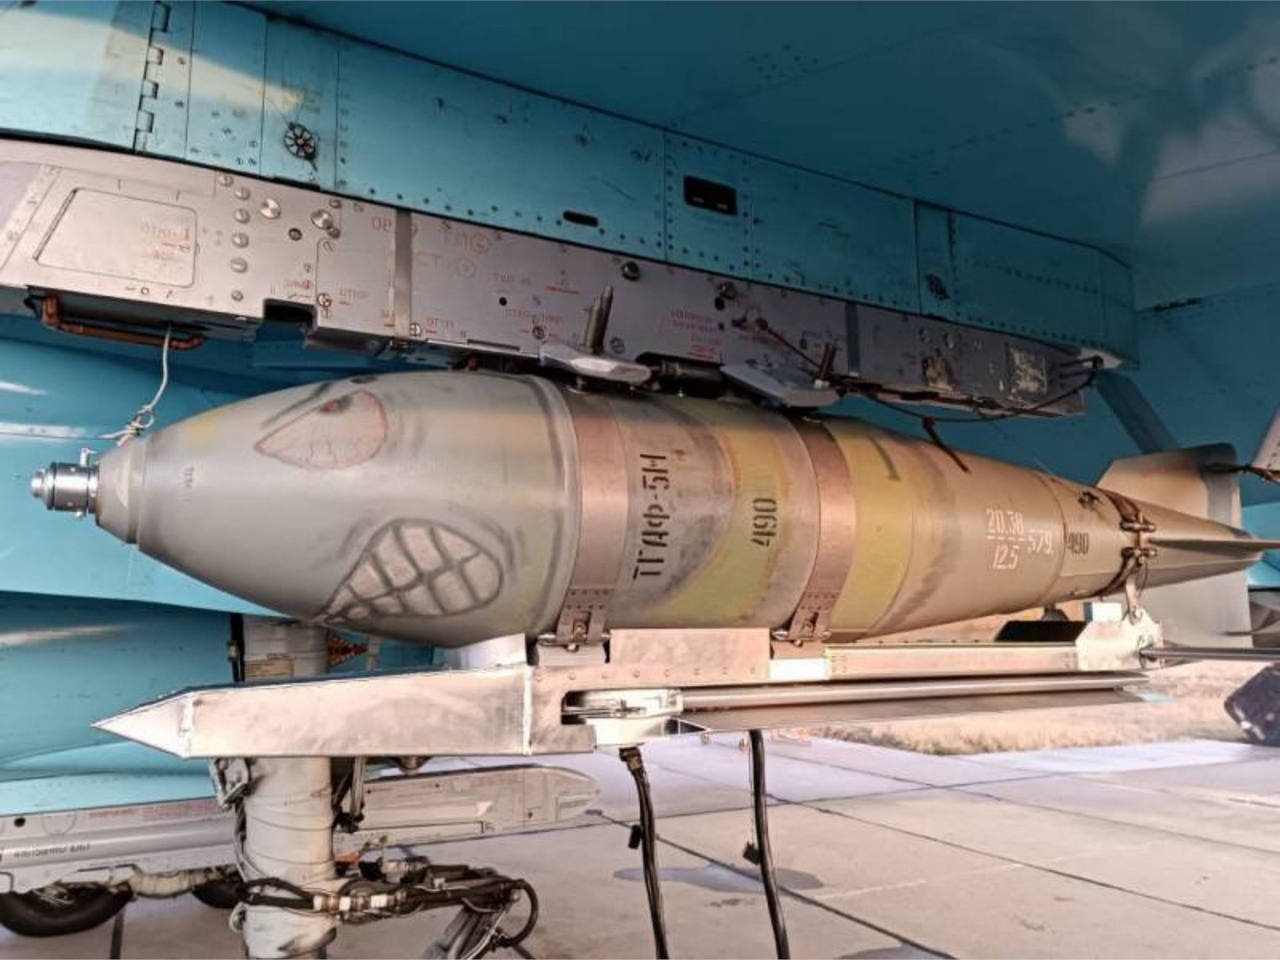 Бомба с УМПК на базе ФАБ-500 М62.